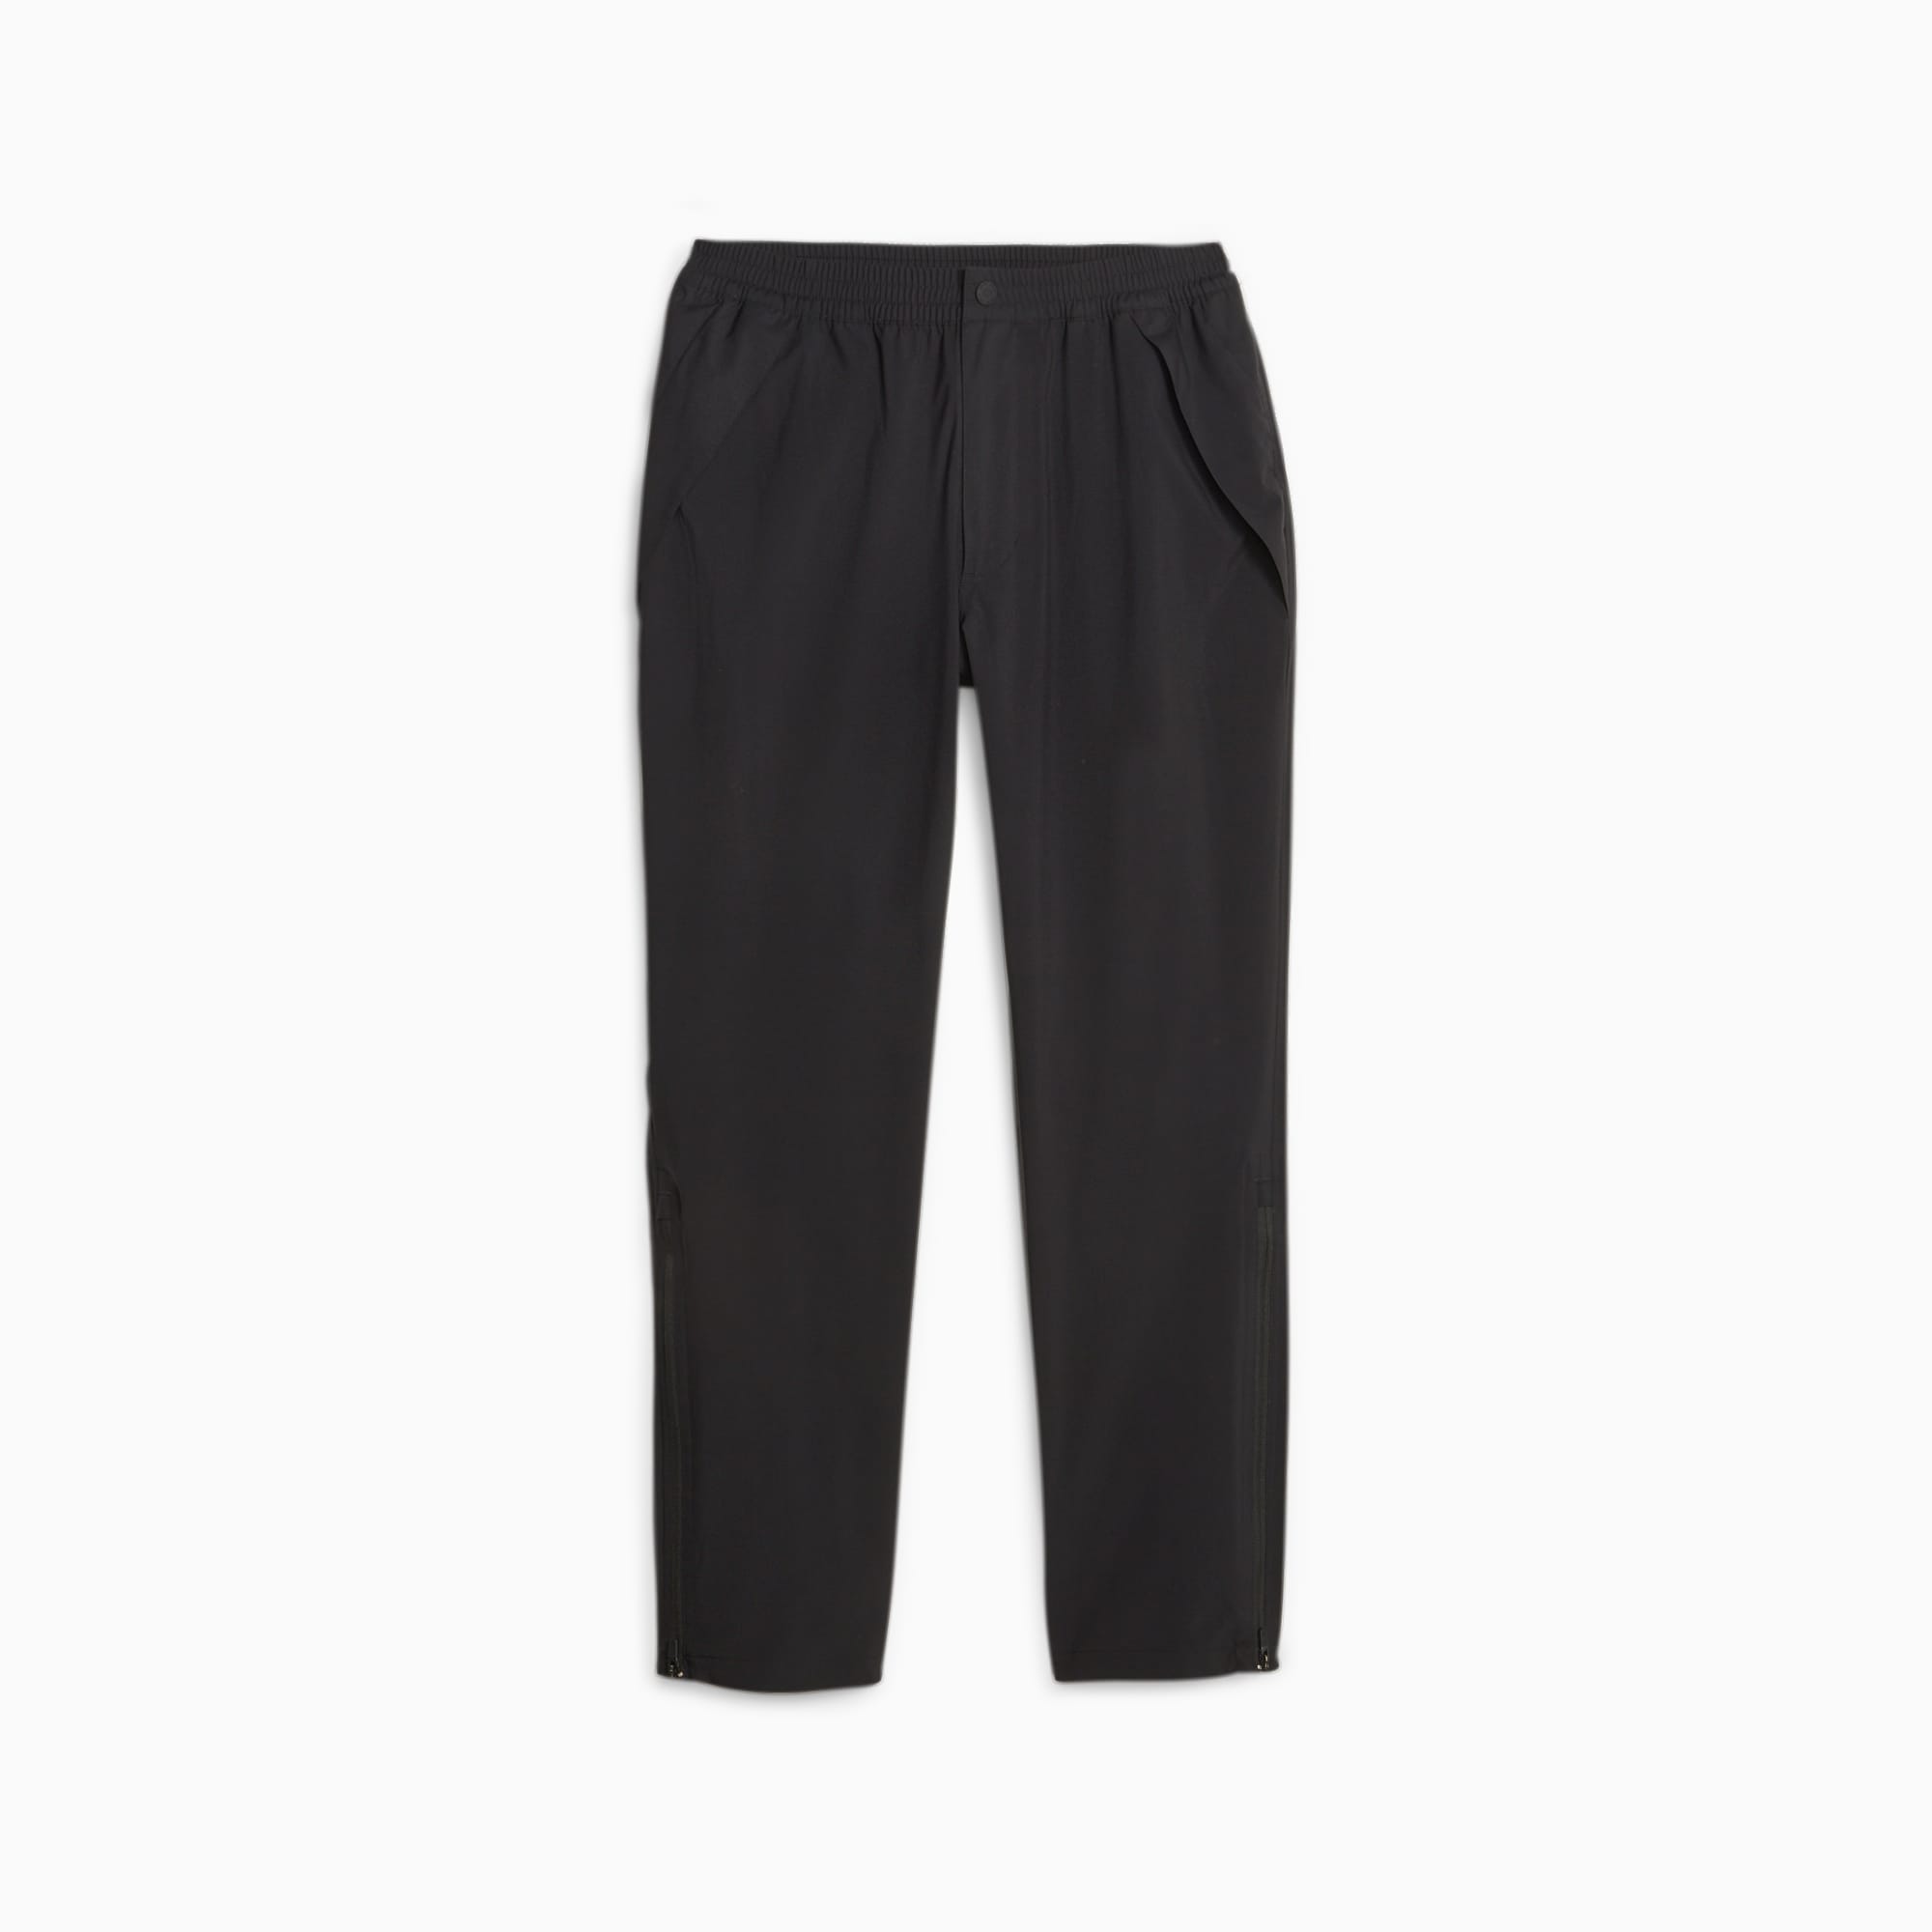 PUMA Drylbl Men's Rain Pants, Black, Size 3XL/S, Clothing